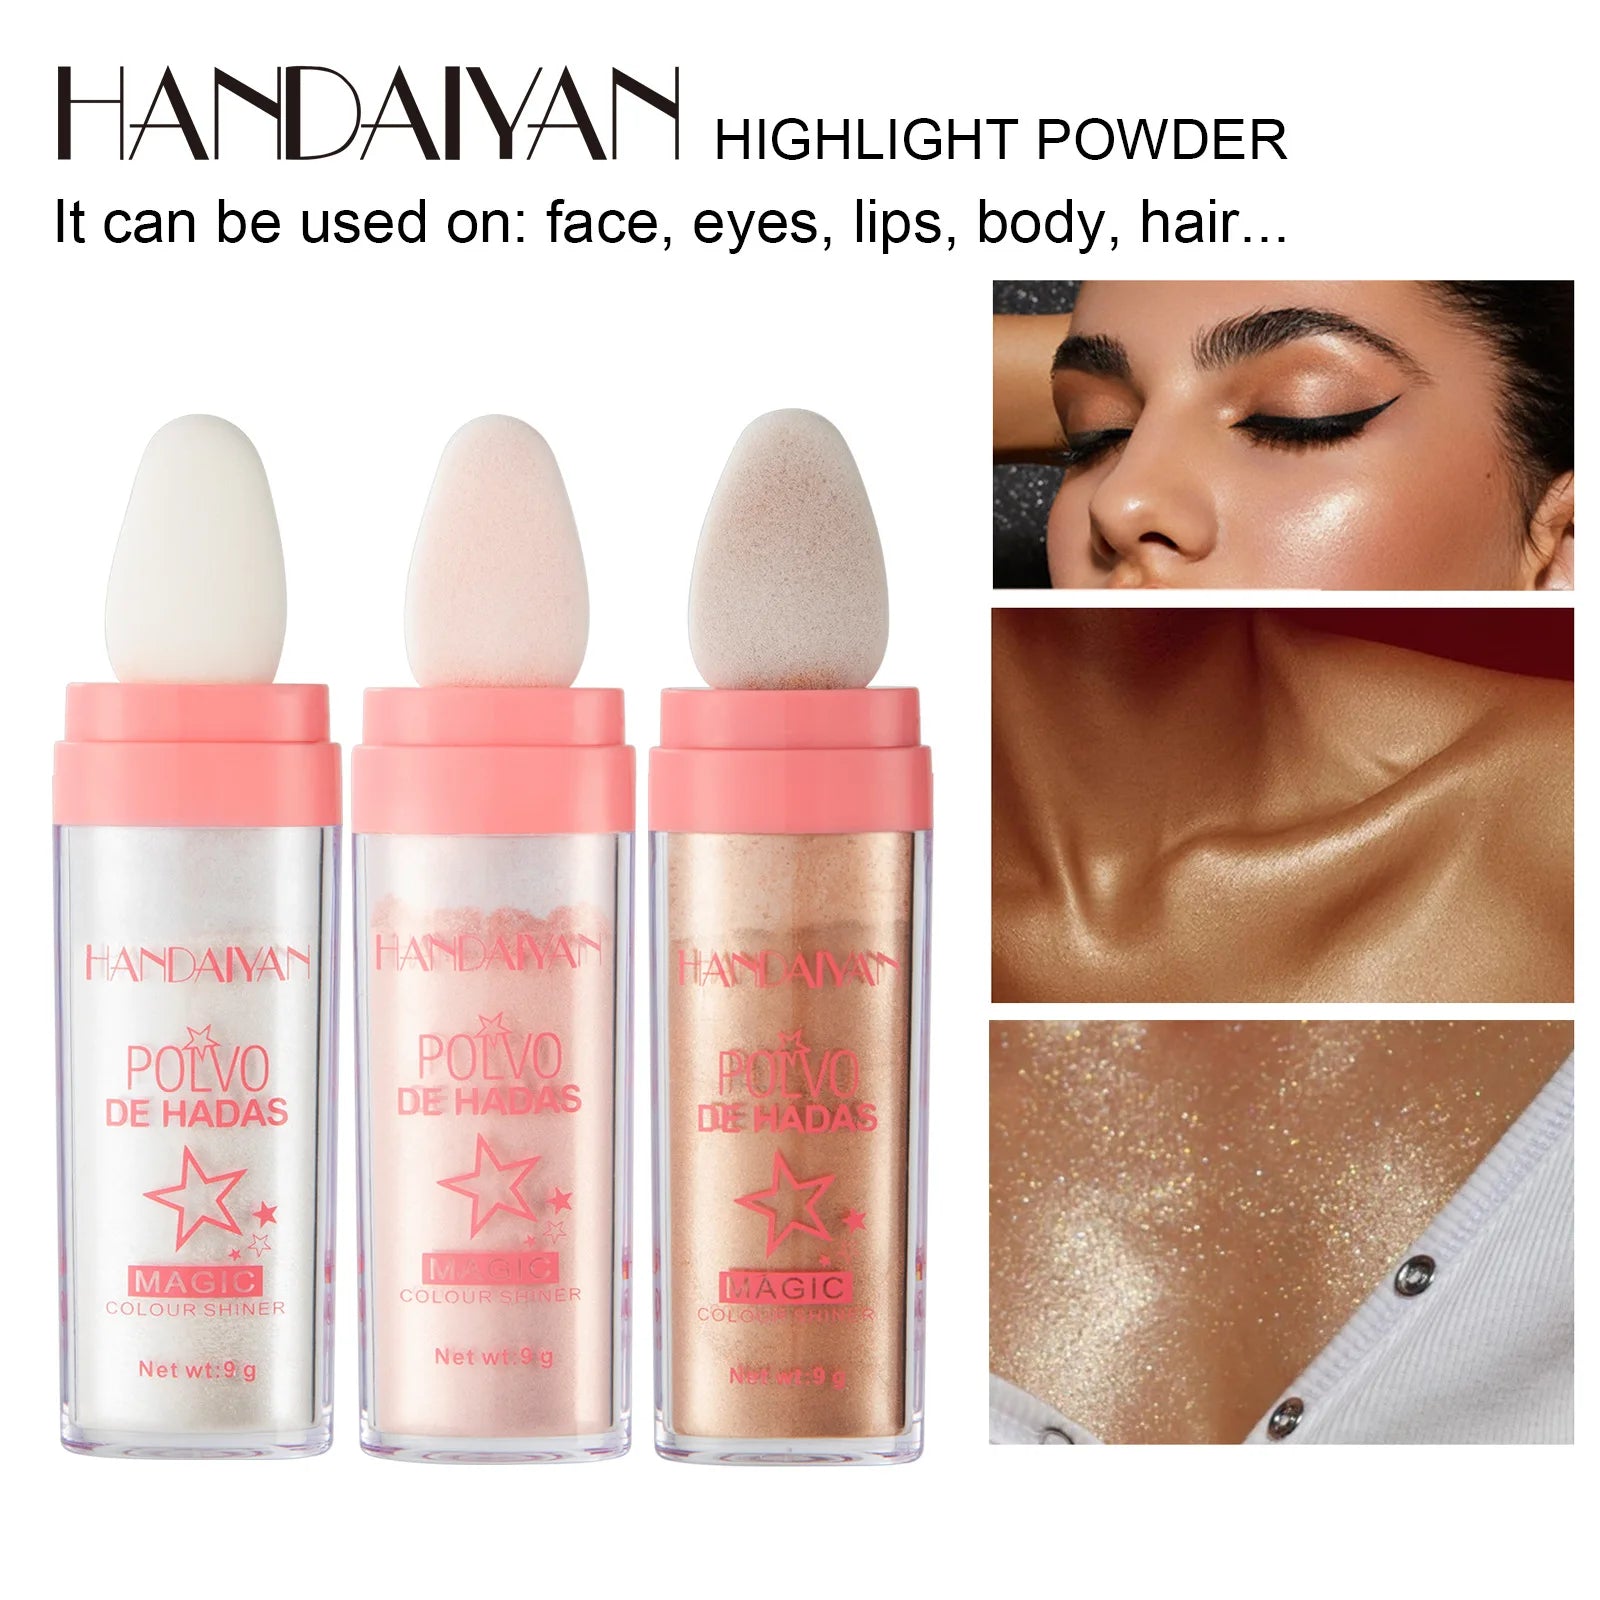 HANDAIYAN Makeup Fairy High Gloss Pat Powder Three Dimensional Powder Brightening Set Powder Powder Blusher High Gloss Powder